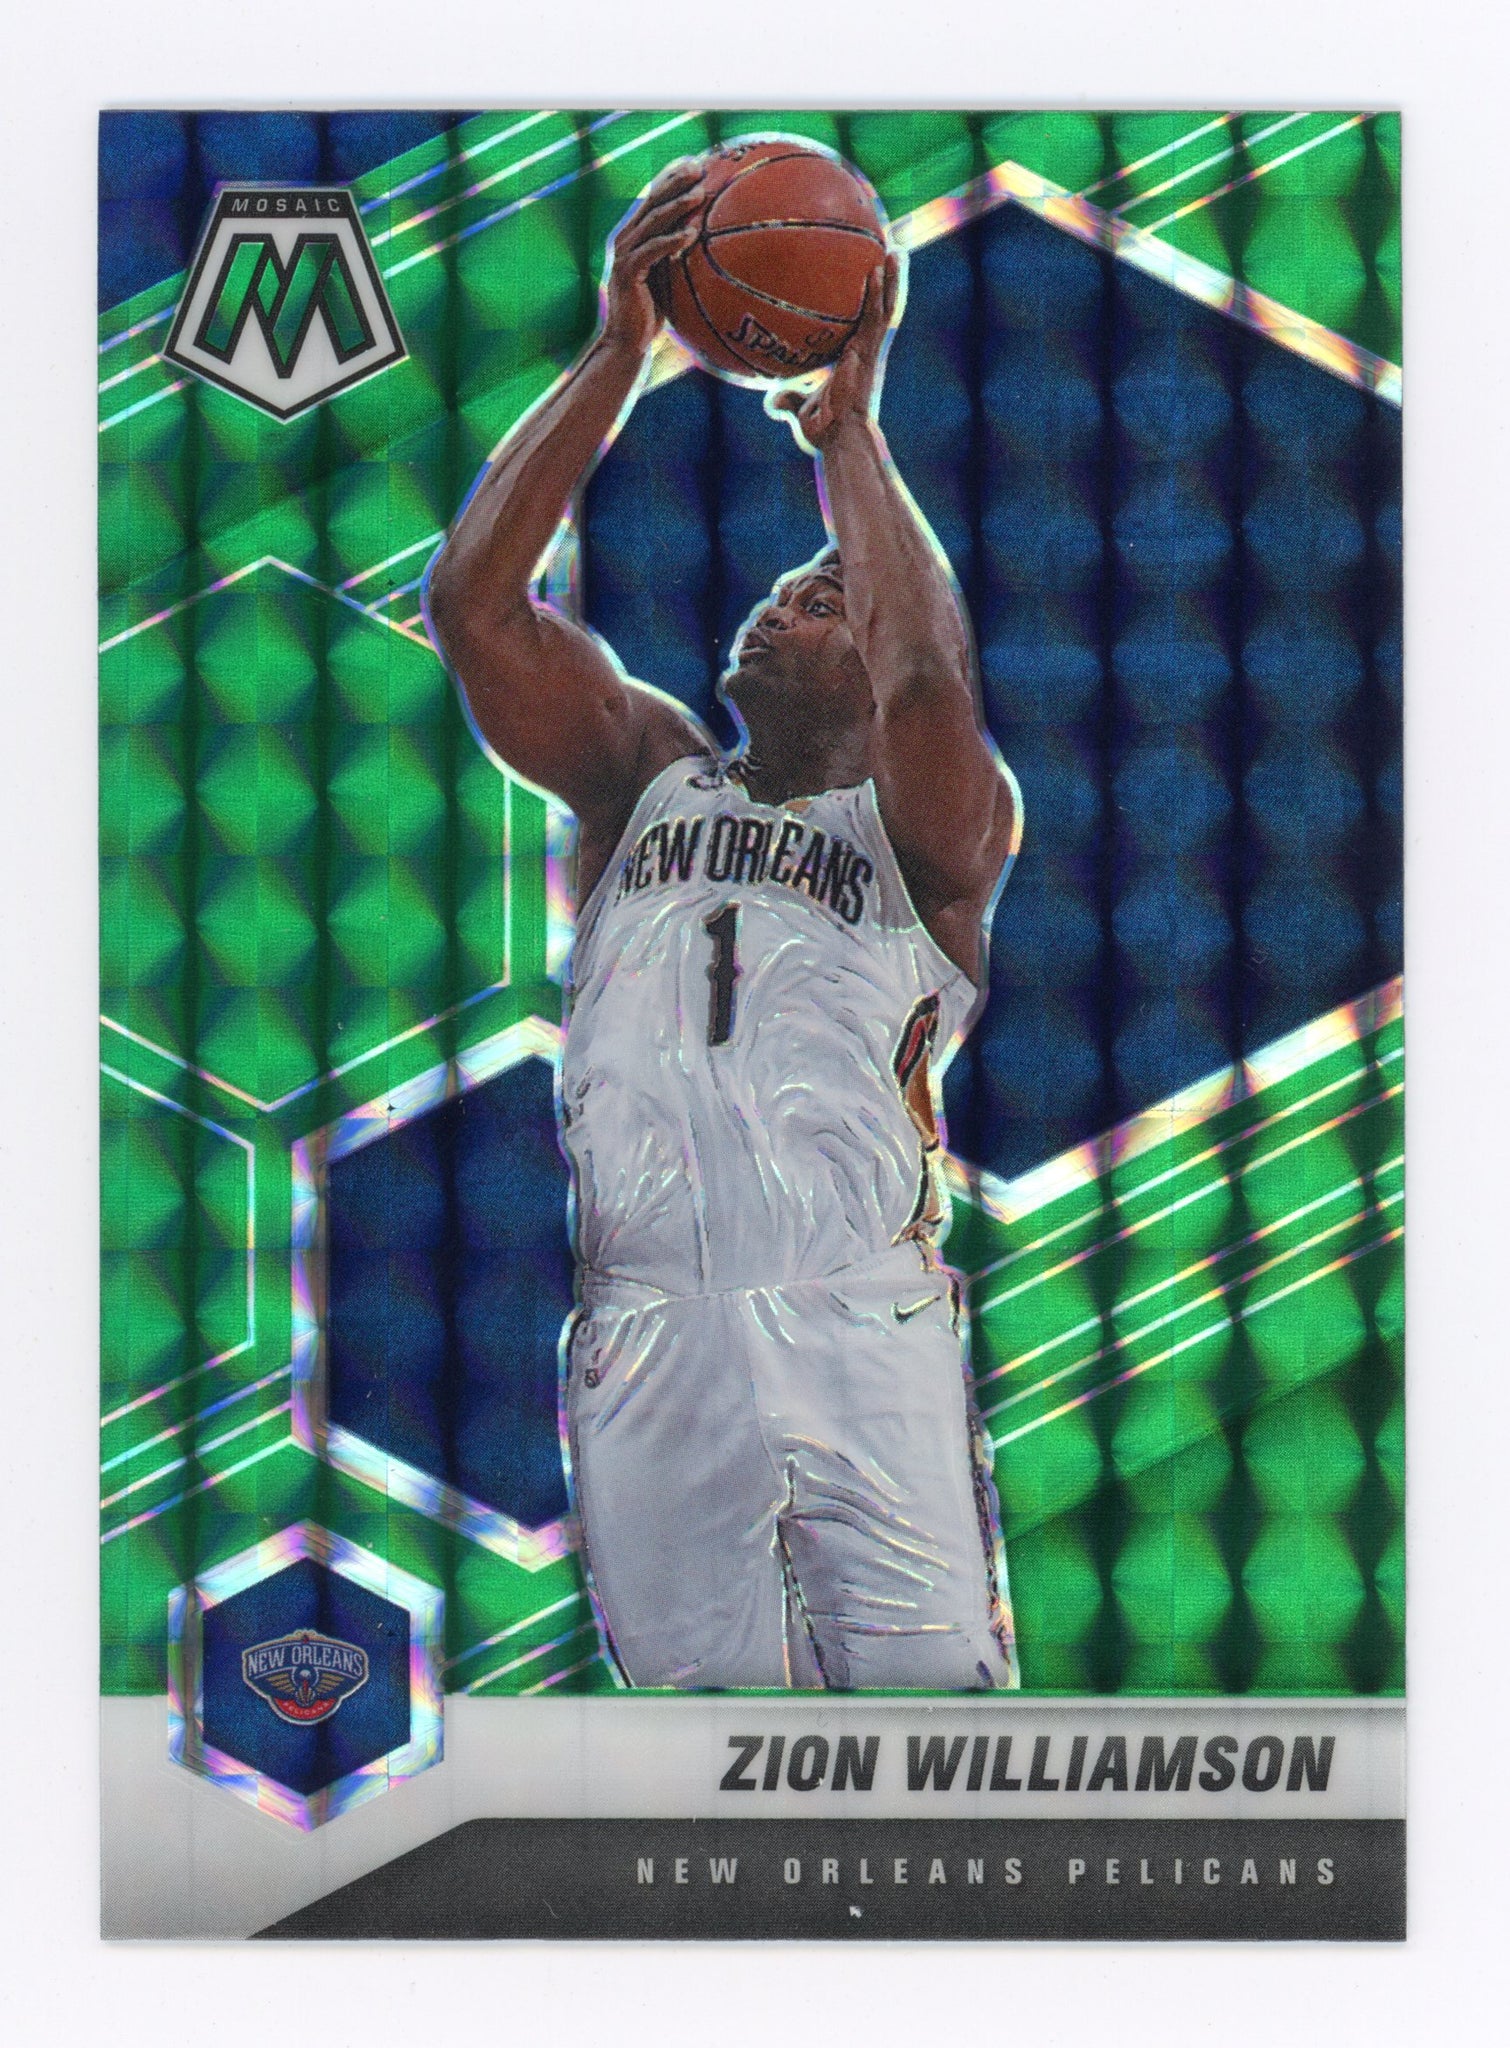 2020-2021 Zion Williamson Green Prizm Mosaic Panini New Orleans Pelicans # 49